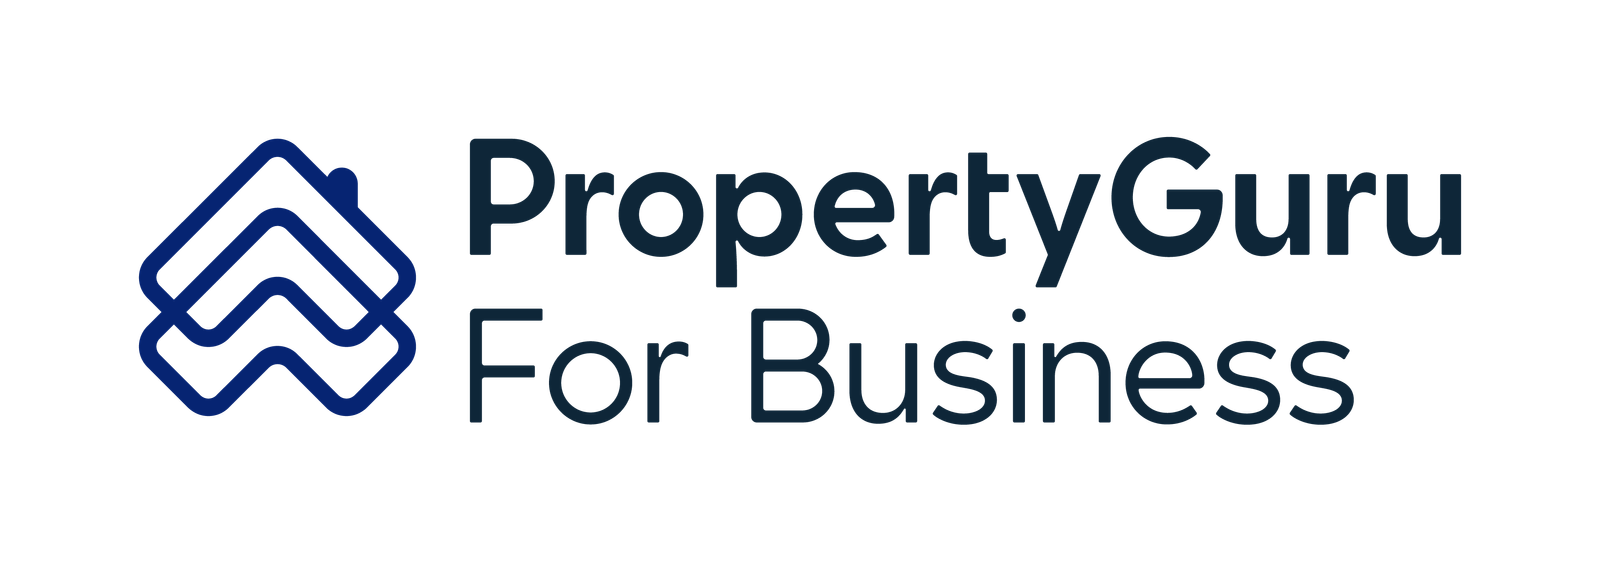 propertyguru for business